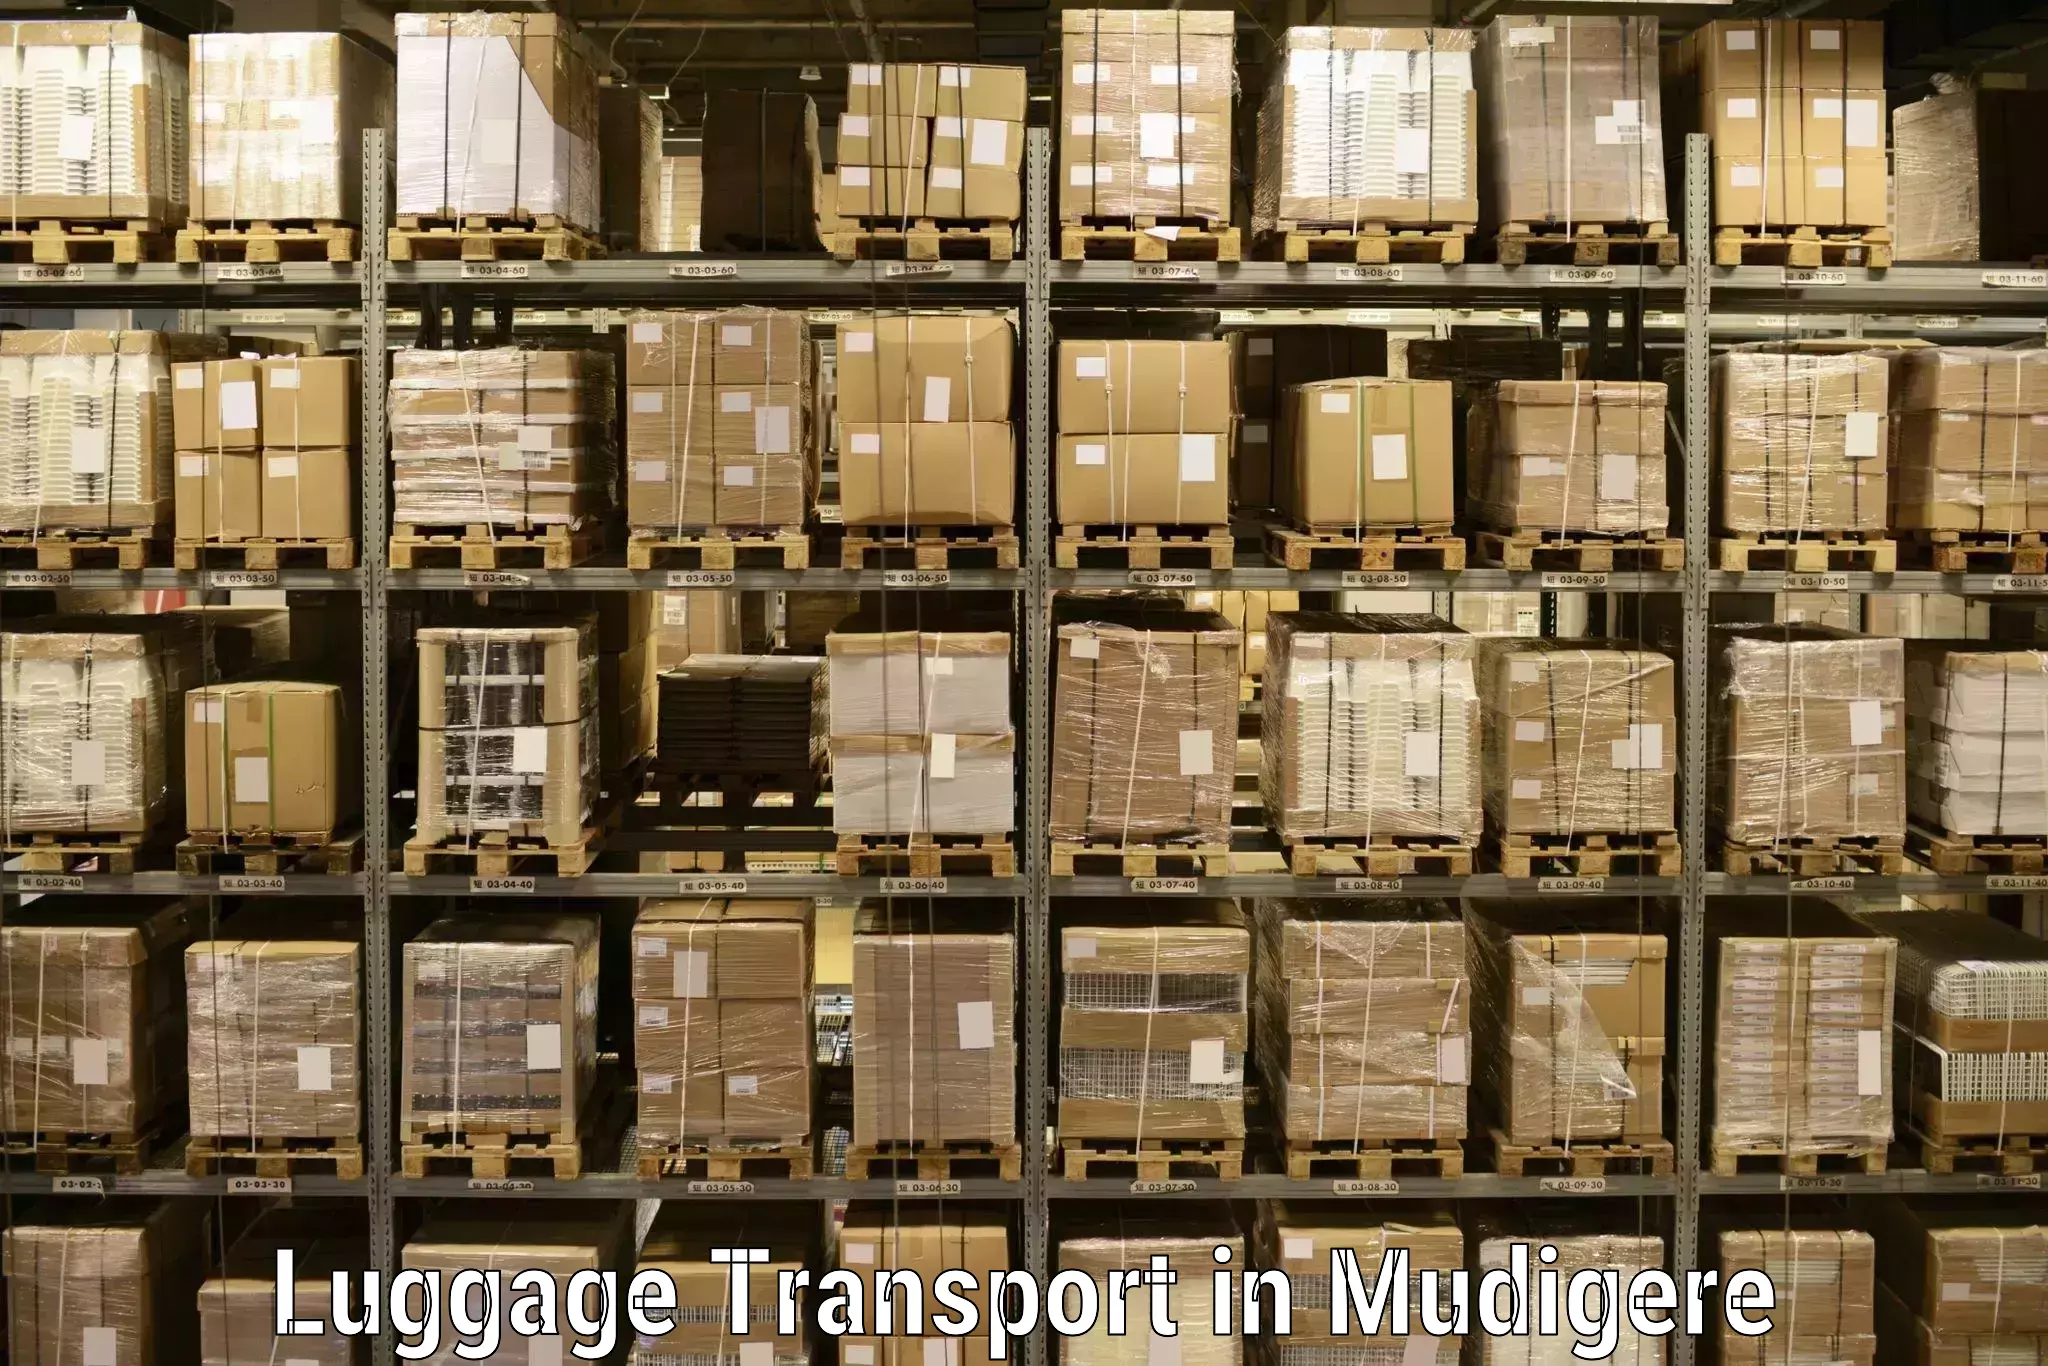 Luggage shipment tracking in Mudigere